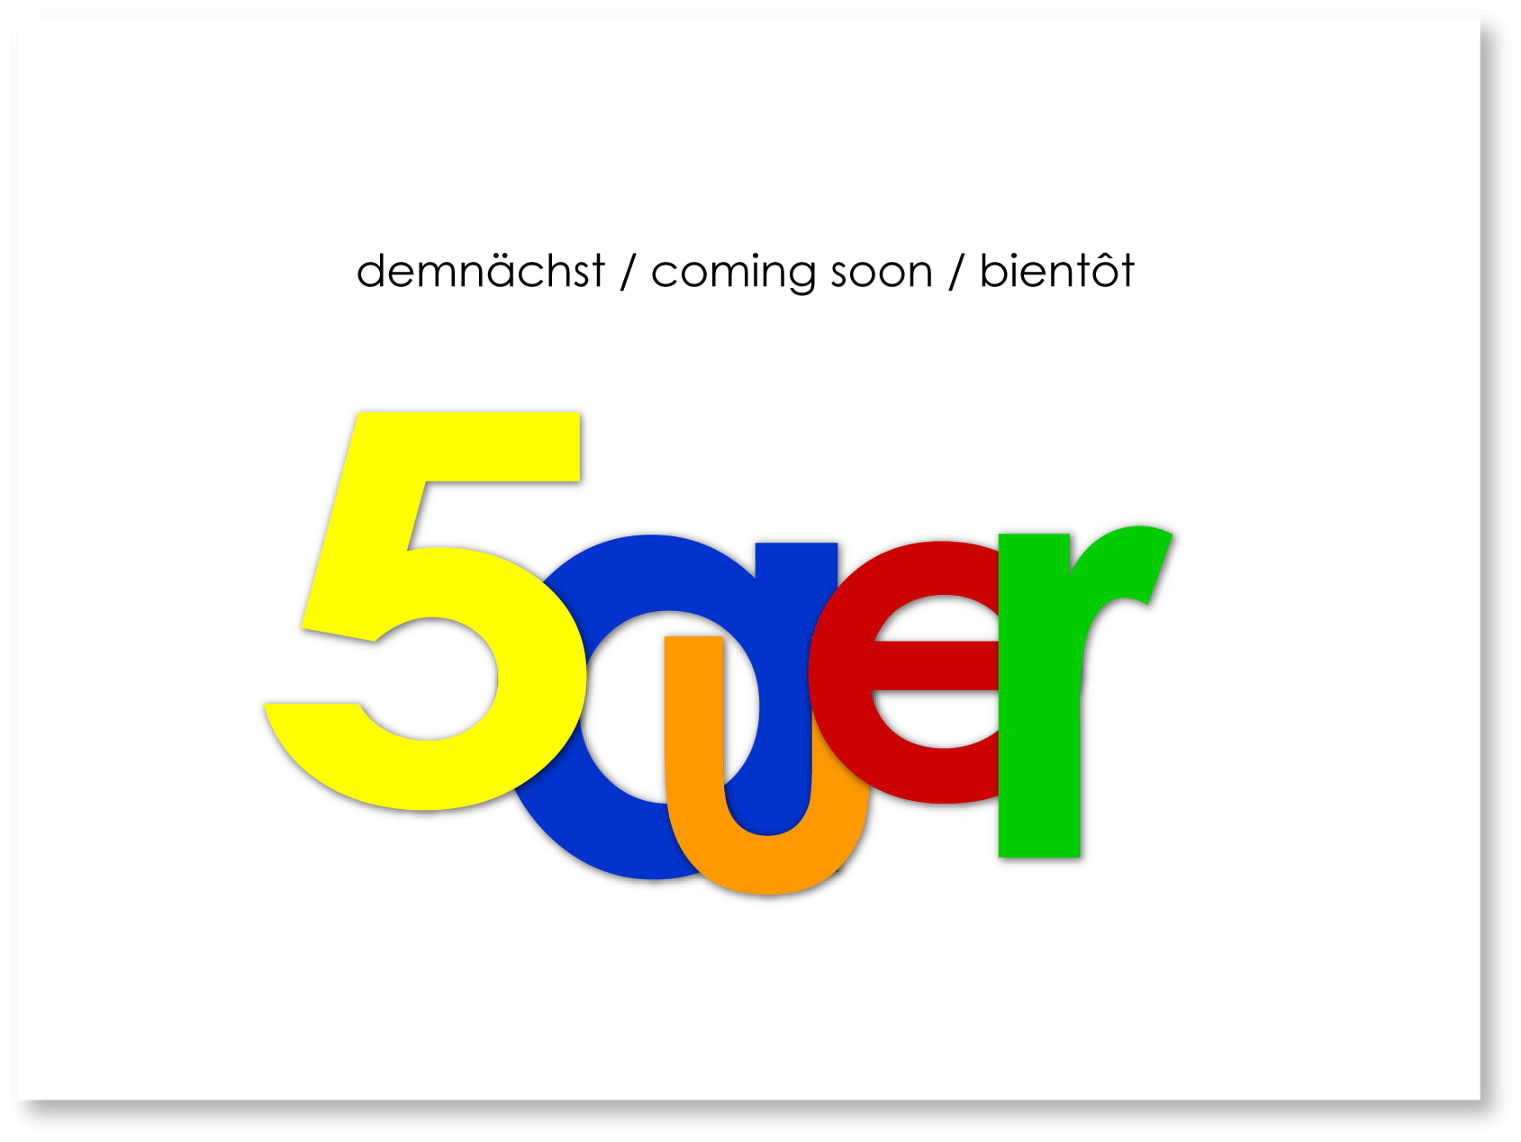 www.5auer.de - demnächst | coming soon | bientôt